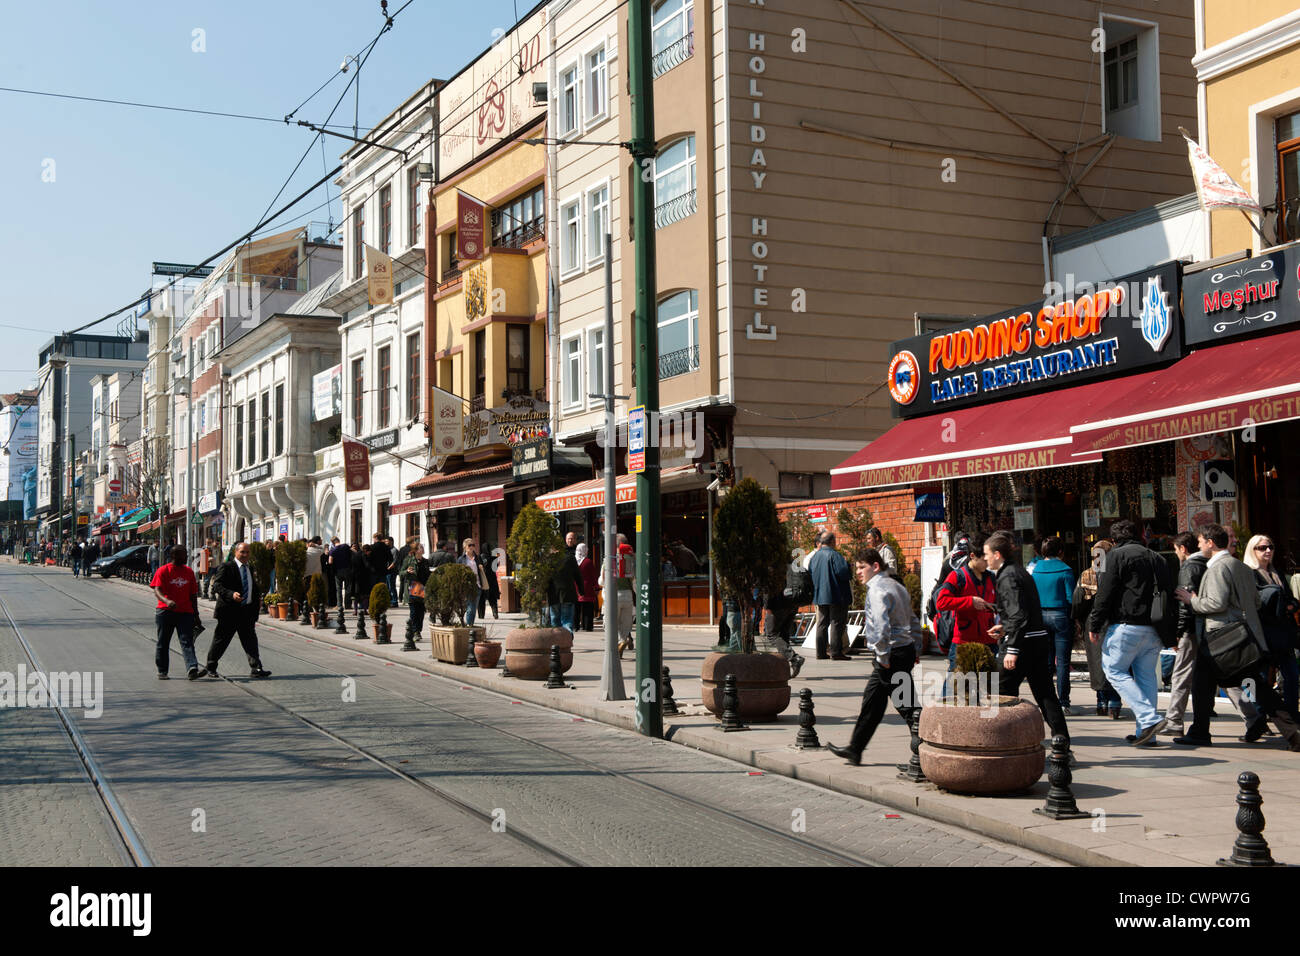 Türkei, Istanbul, Sultanahmet, Divanyolu, vorne der berühmte Puddingshop. Stock Photo